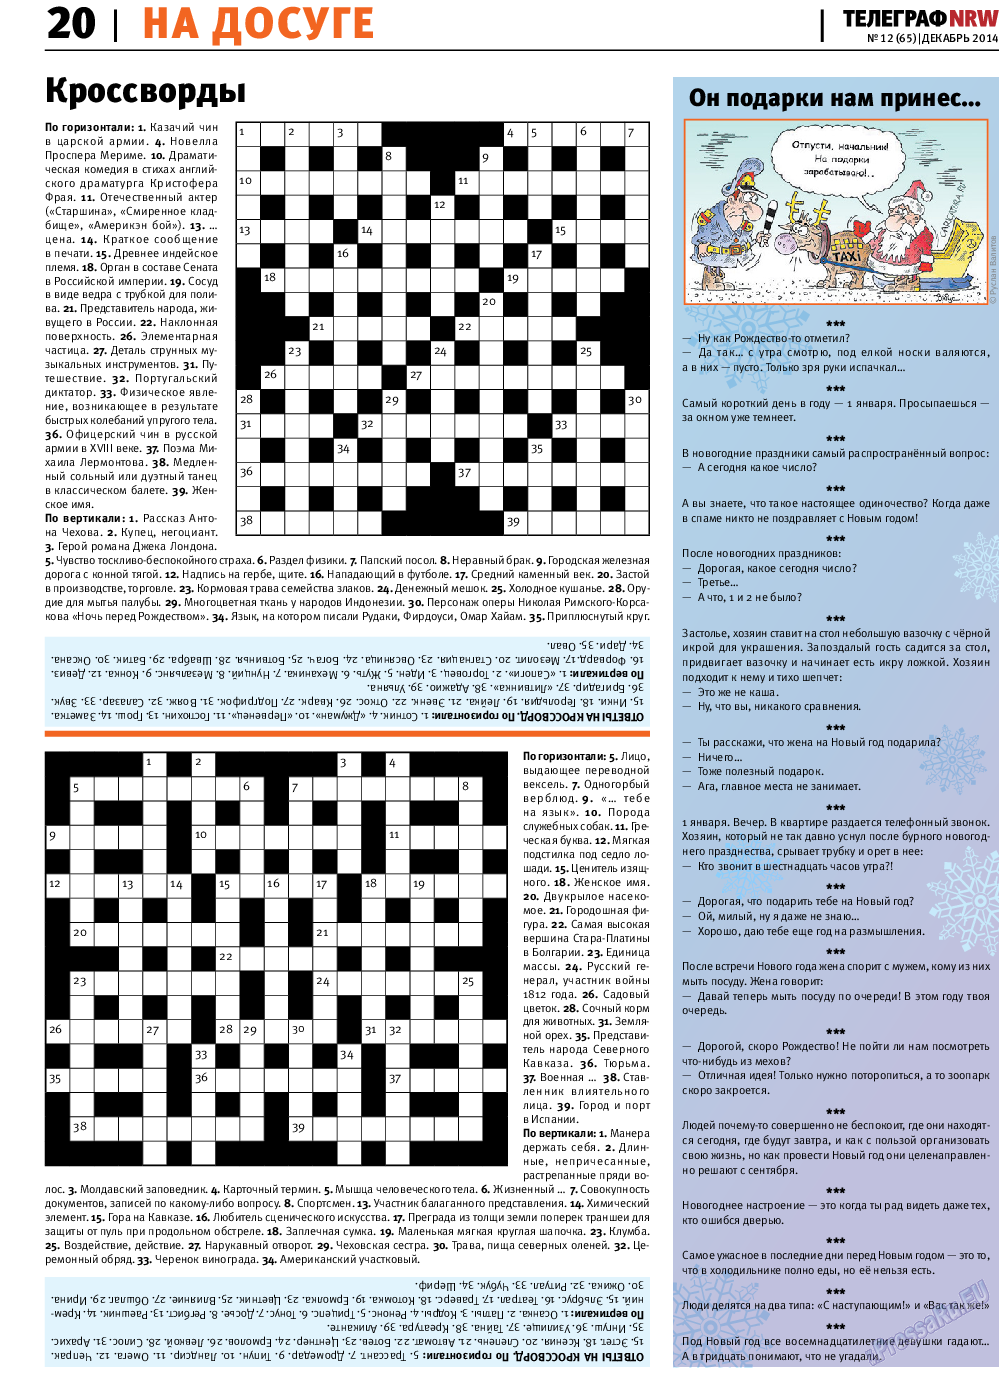 Телеграф NRW, газета. 2014 №12 стр.20